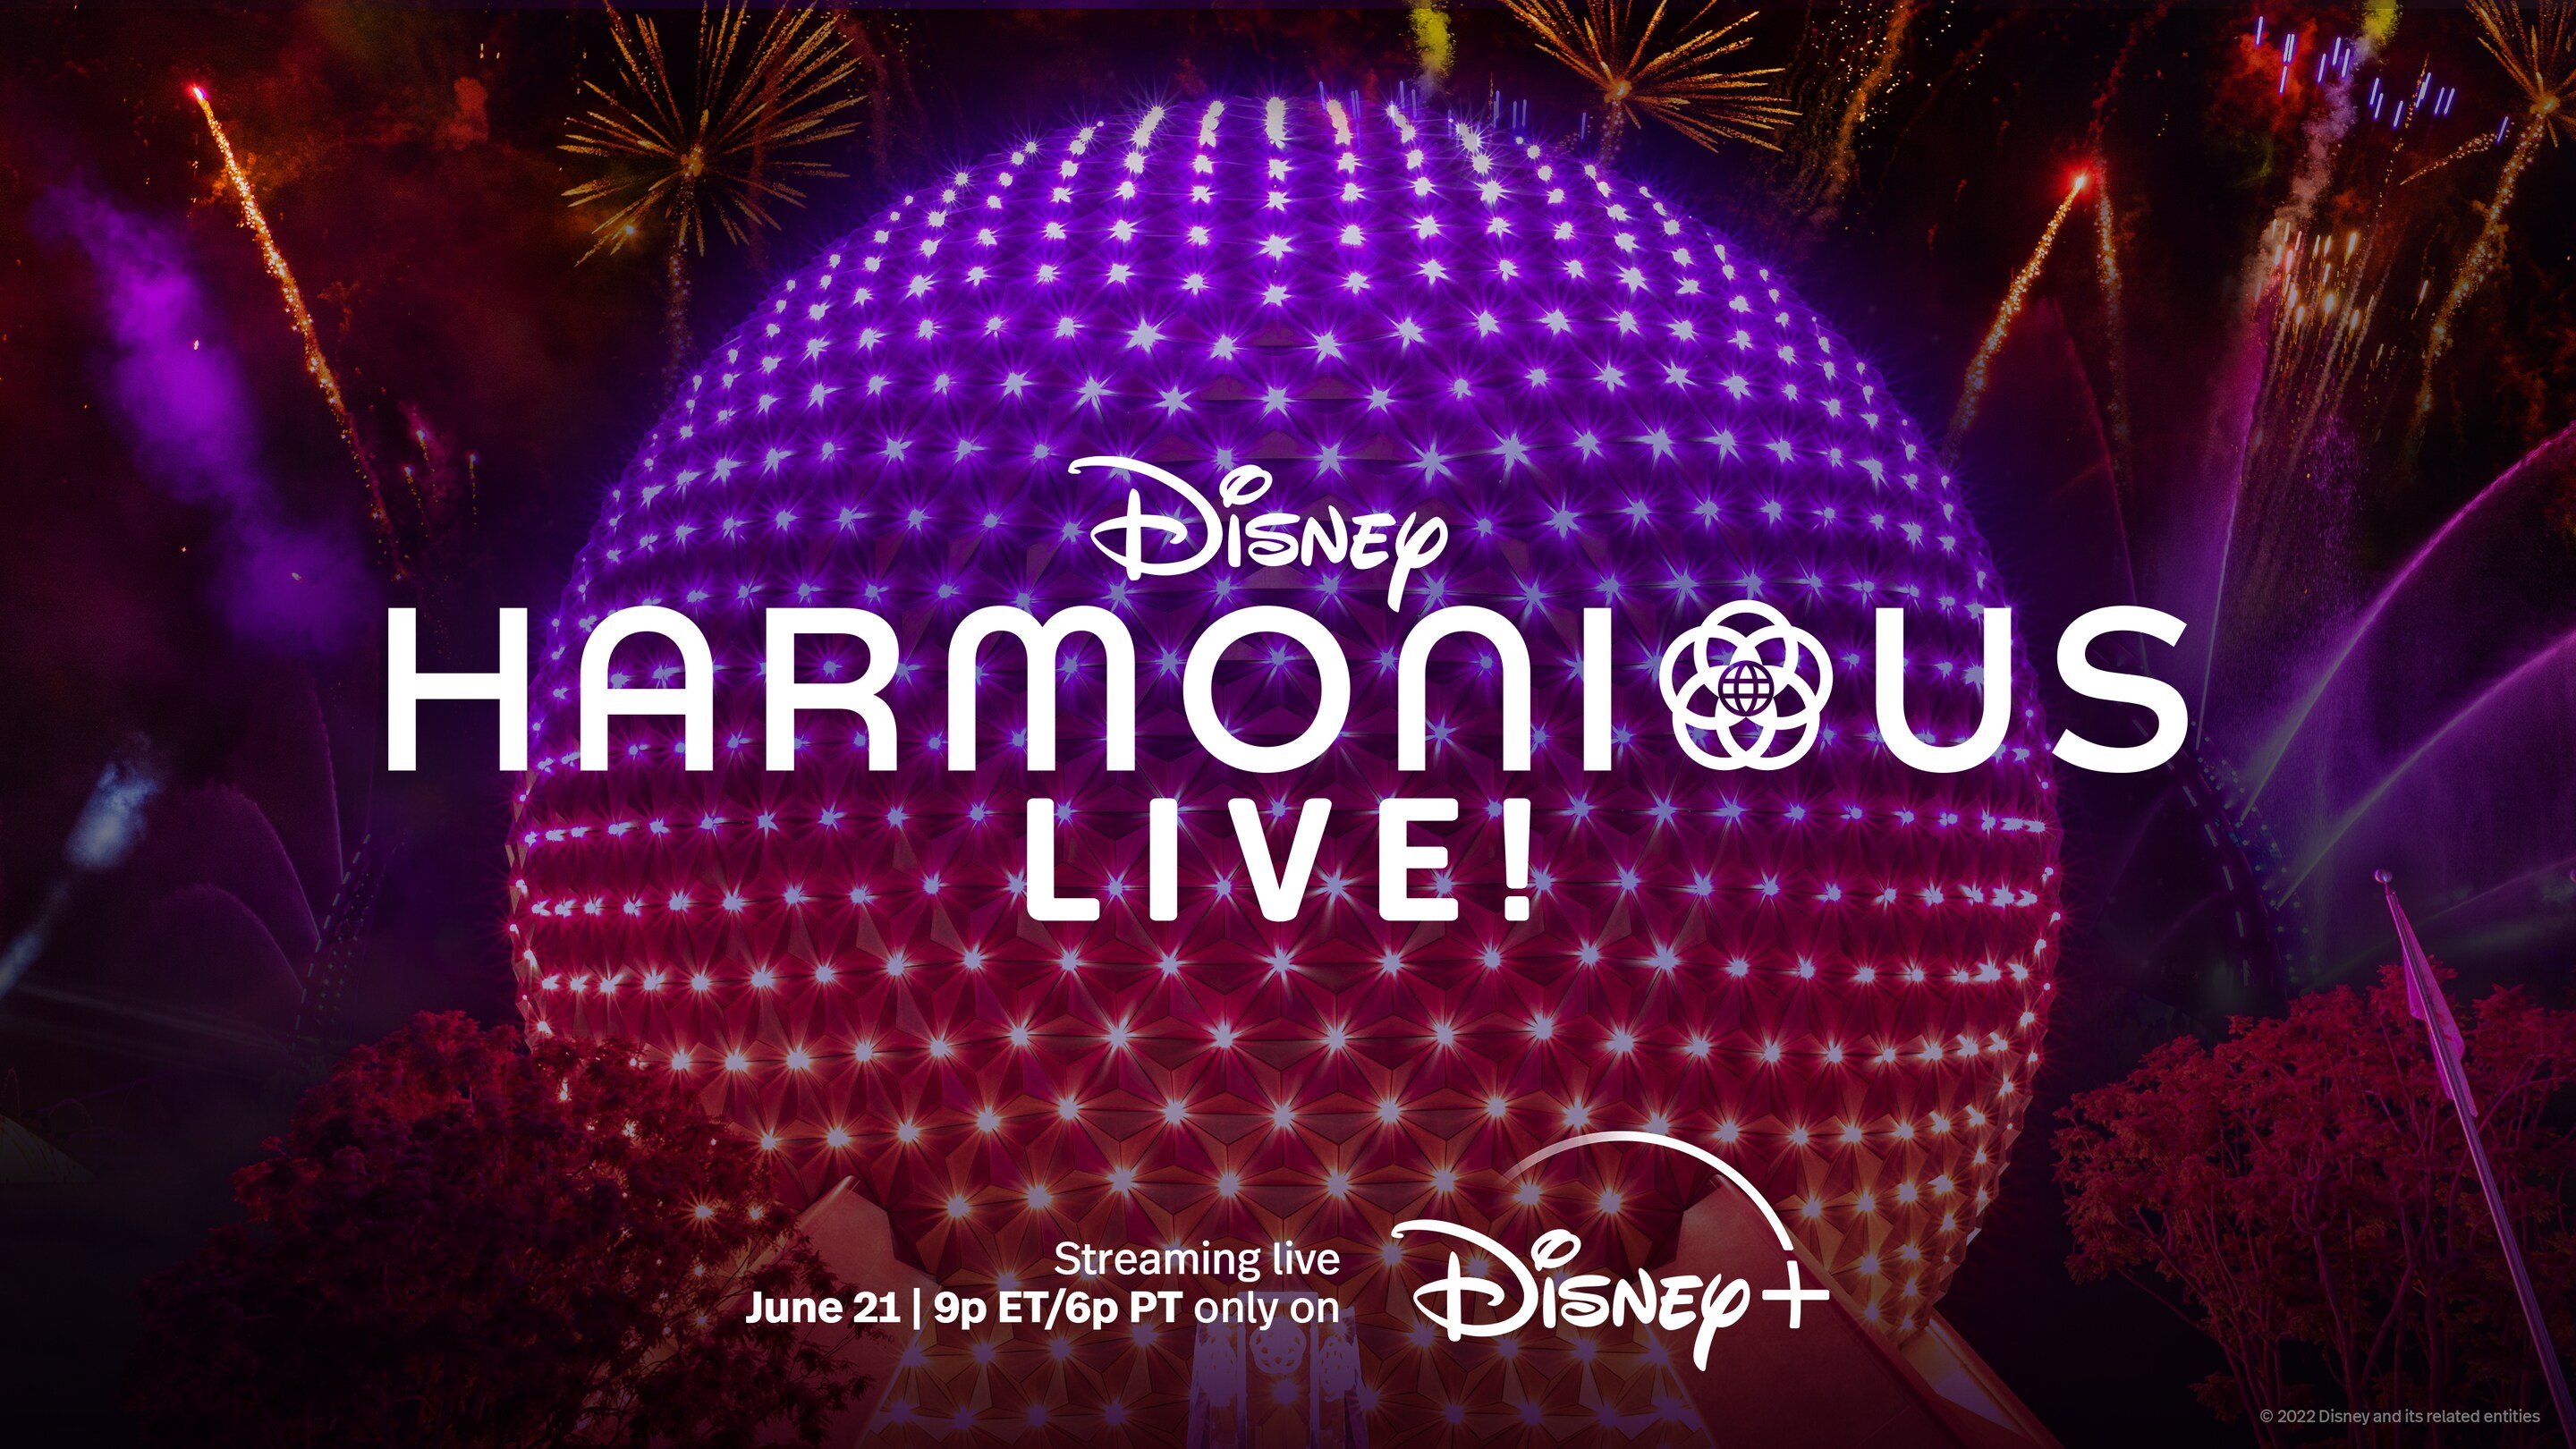 Disney+ To Livestream “Harmonious Live!” Nighttime Spectacular From EPCOT At Walt Disney World Resort On June 21 Disney Plus Press